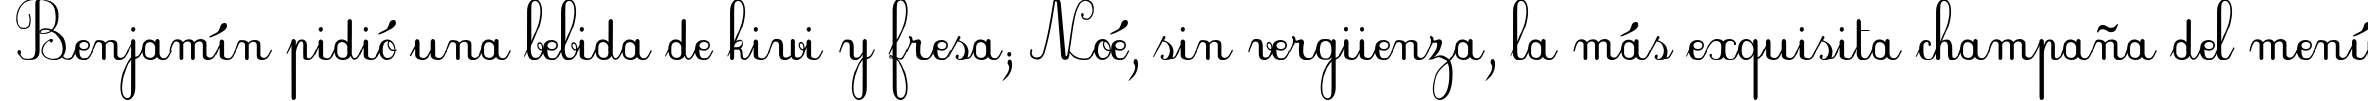 Пример написания шрифтом Plum Script текста на испанском